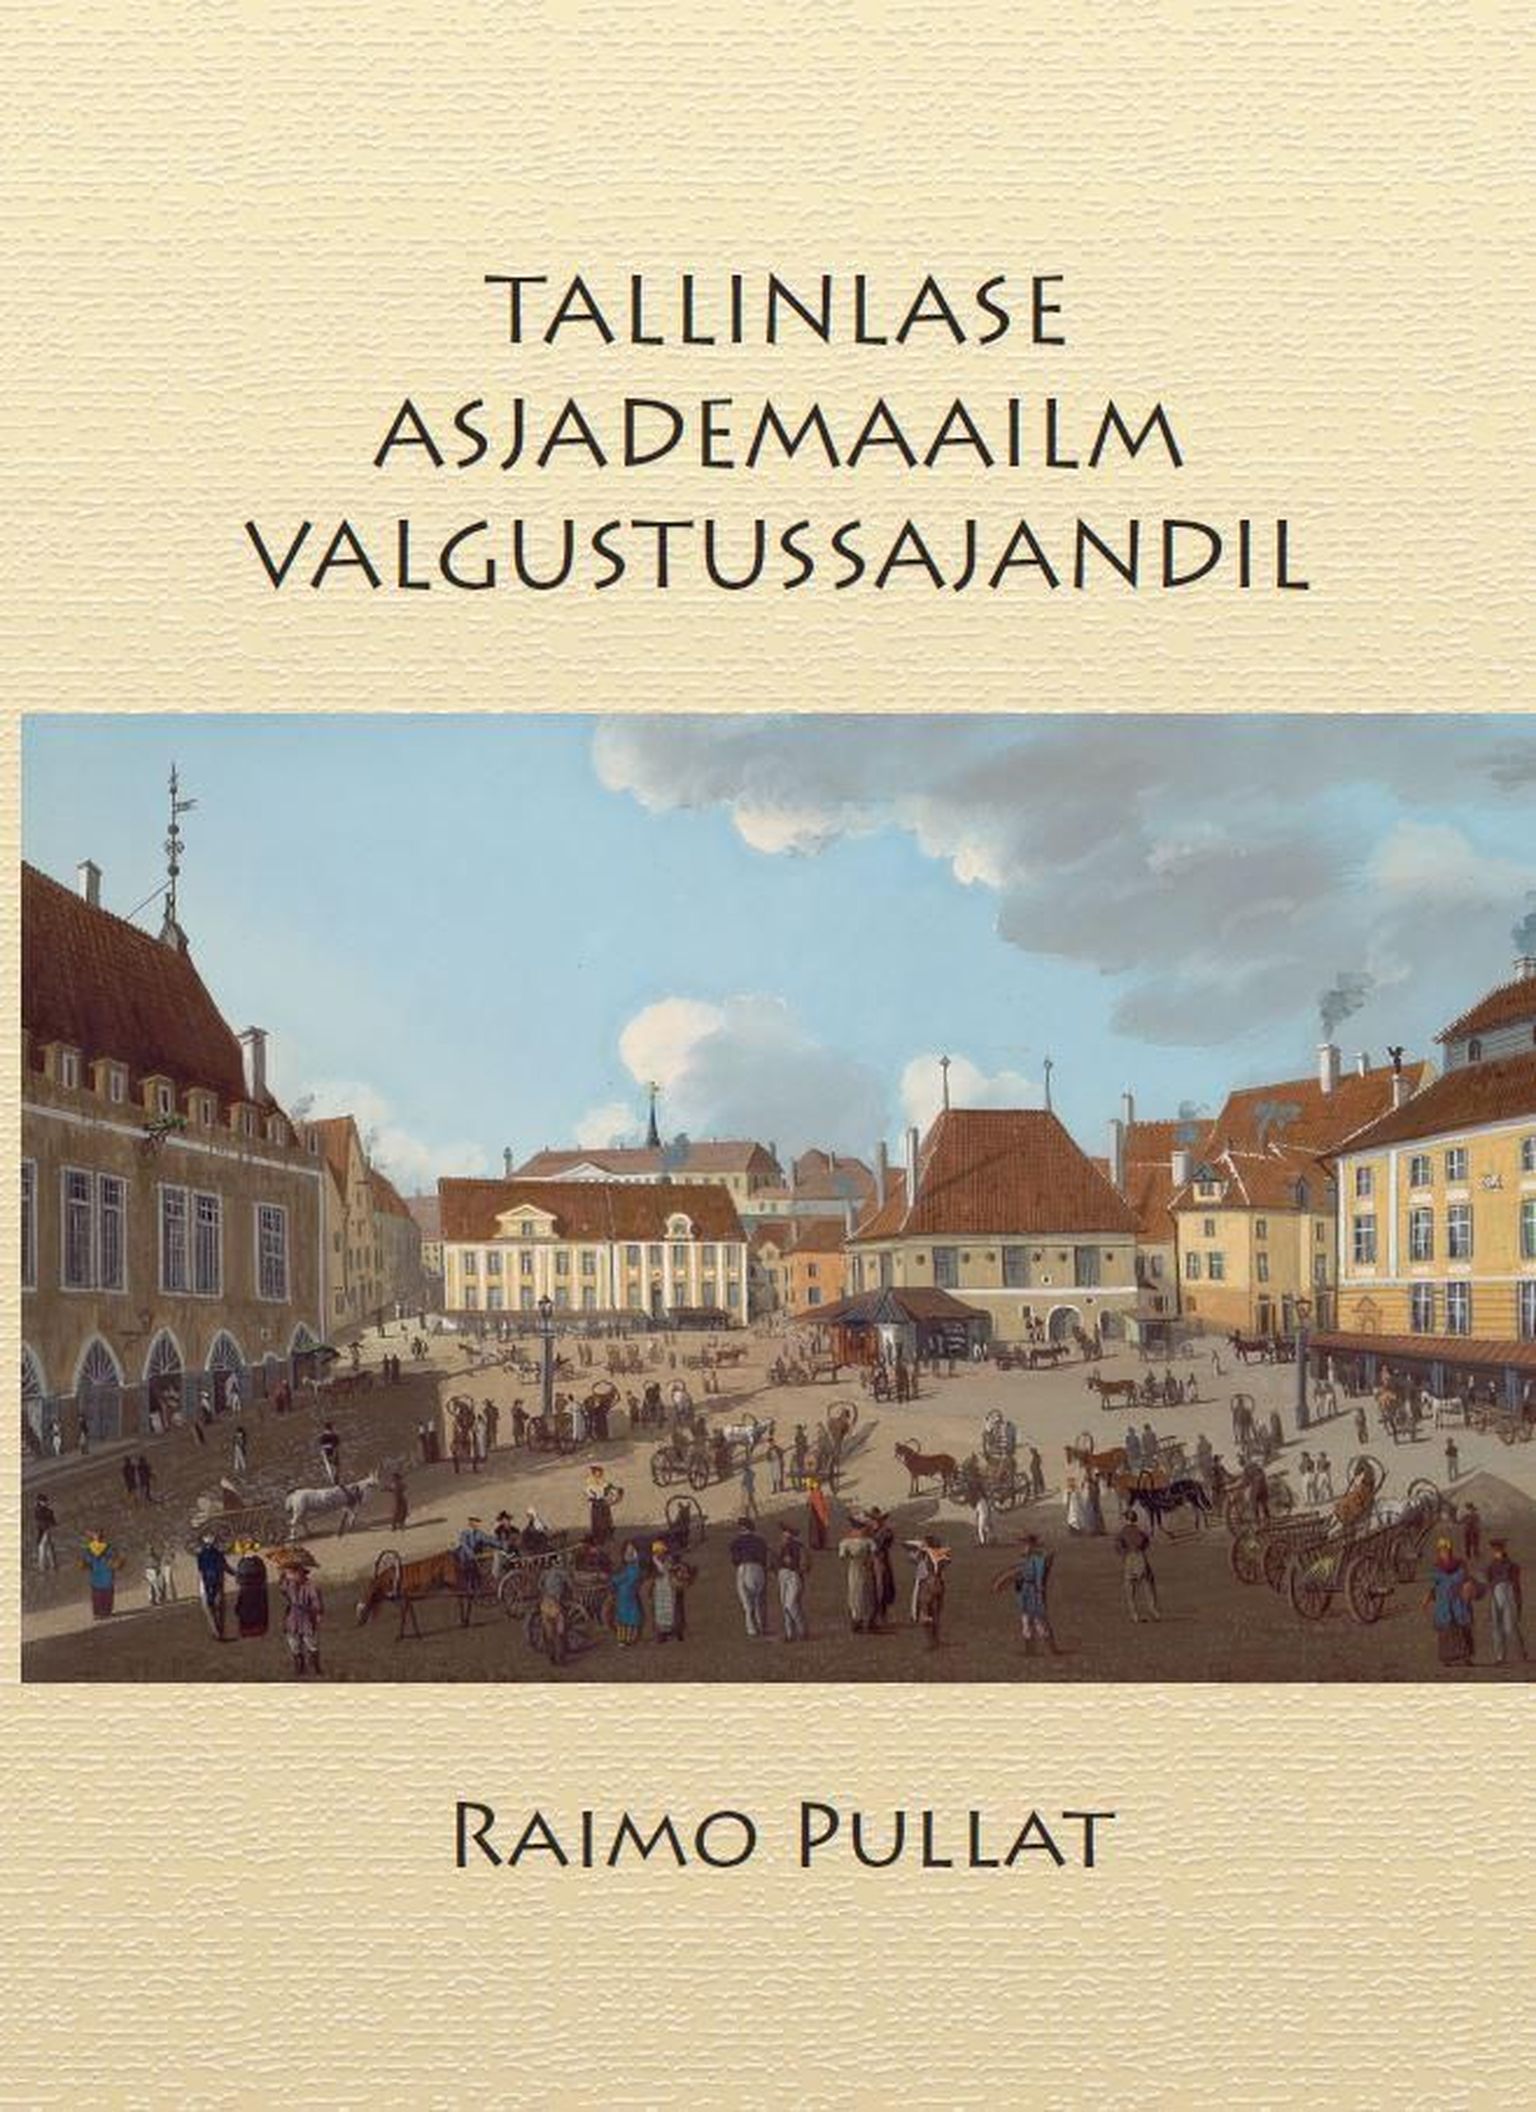 R. Pullat. Tallinlase asjademaailm valgustussajandil. Estopol, 2016. 384 lk.